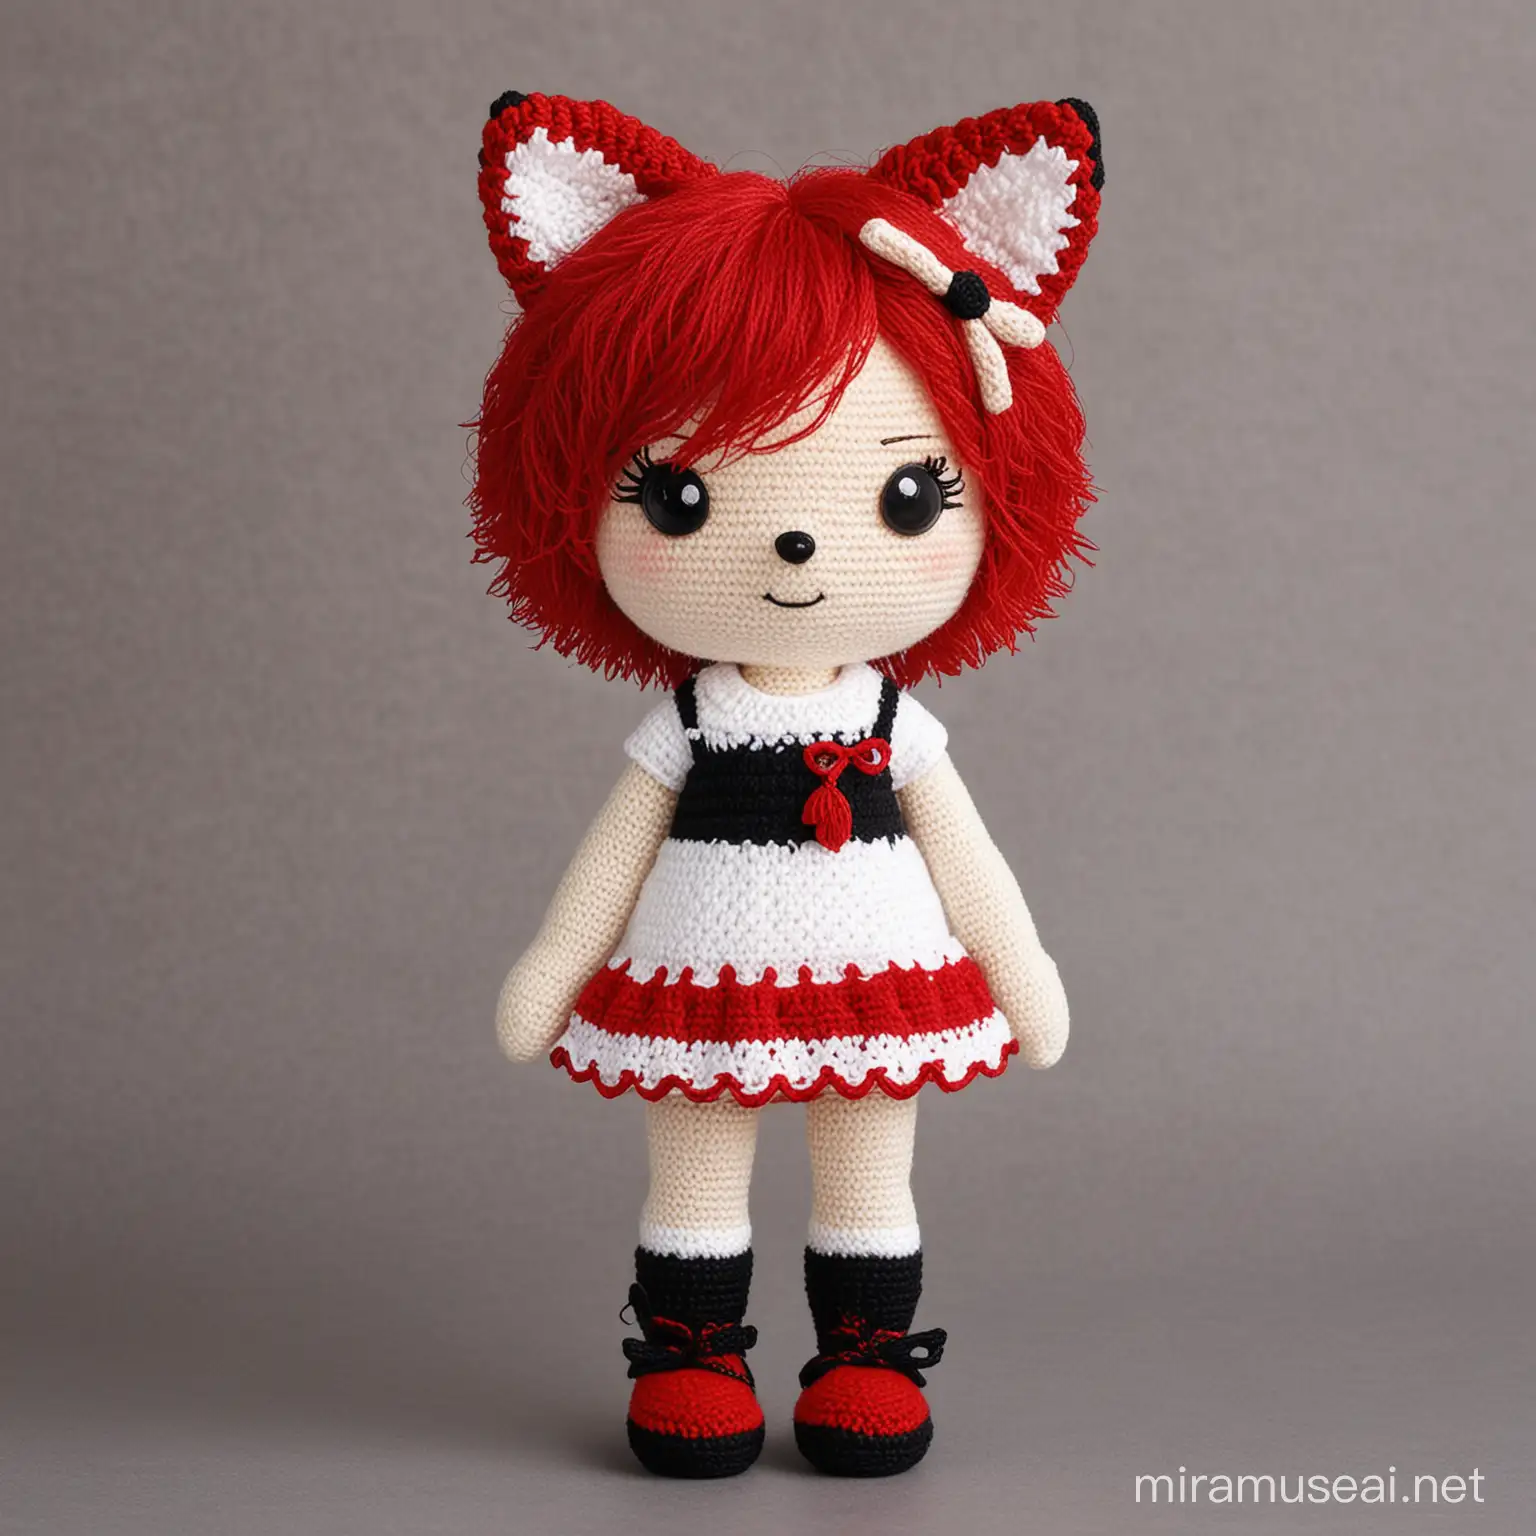 Amigurumi crochet little baby girl, burgundi red short hair, Fox ears, red And white dress, black stocking, black shues